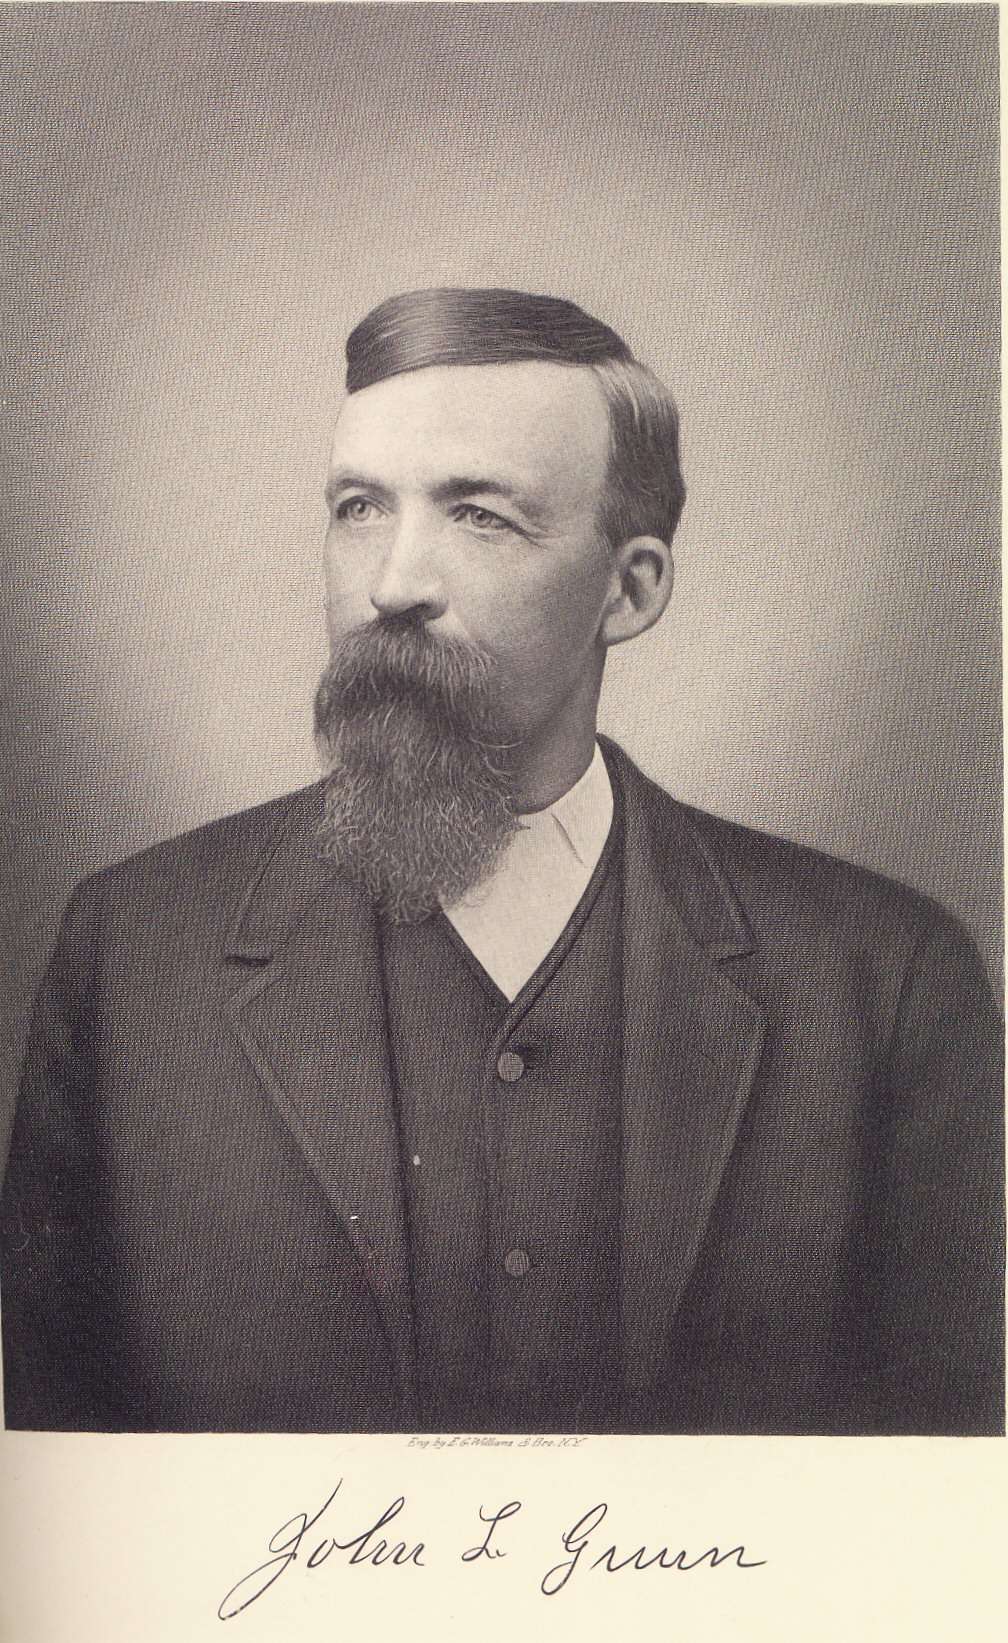 John L. Gunn